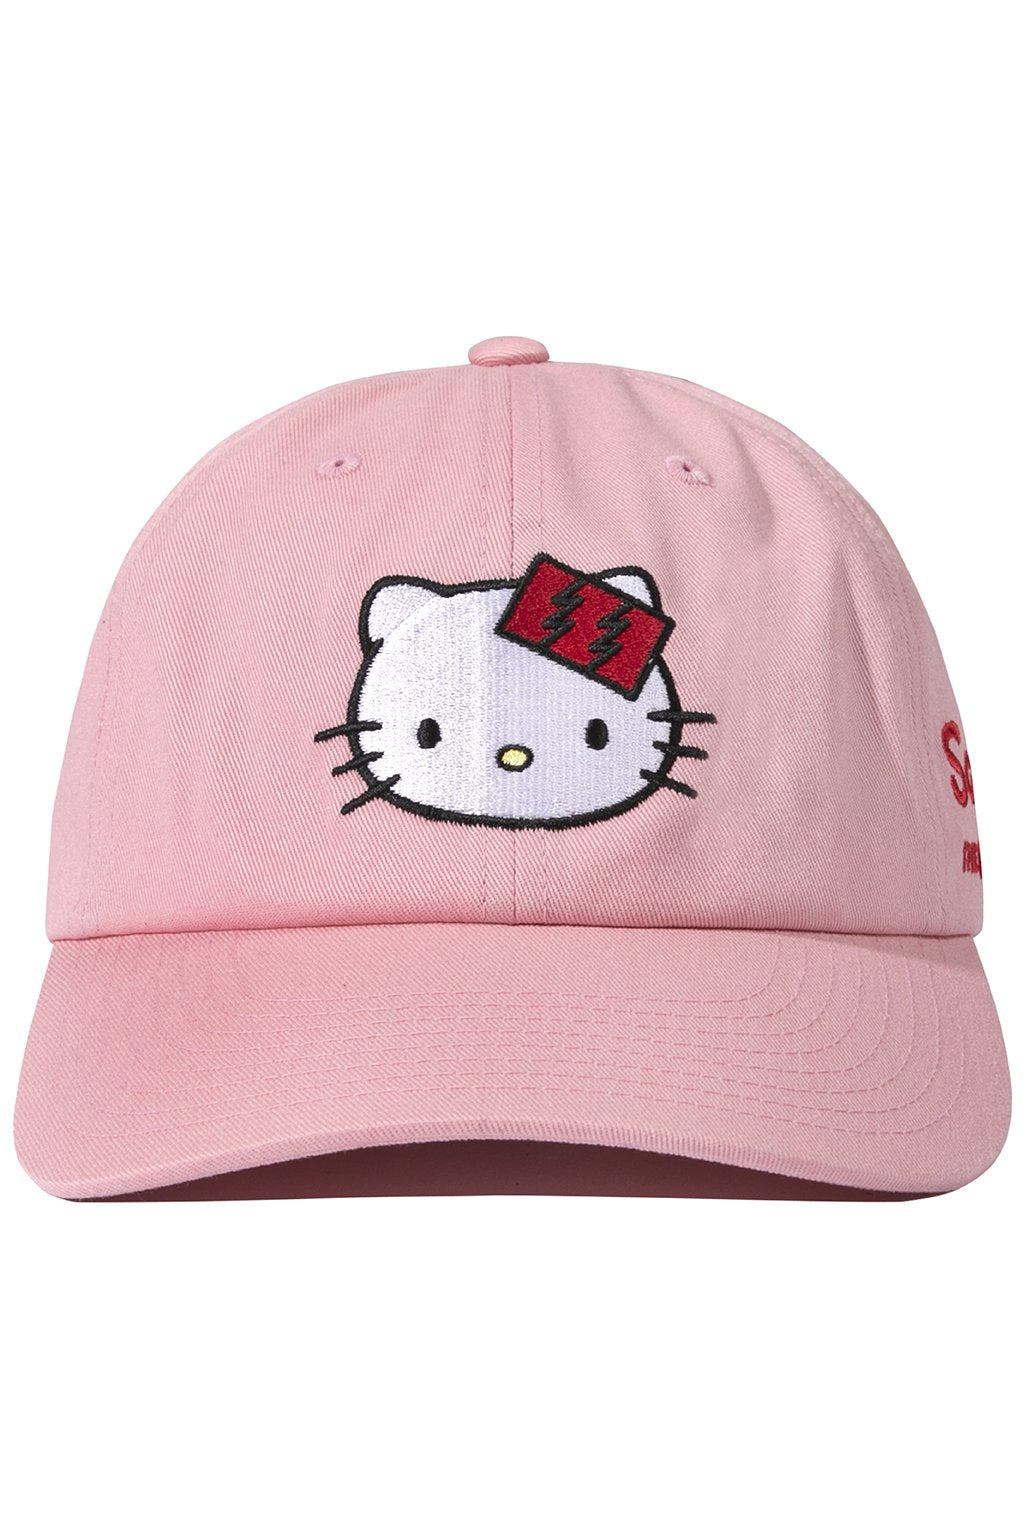 Hello Kitty Hats for Men